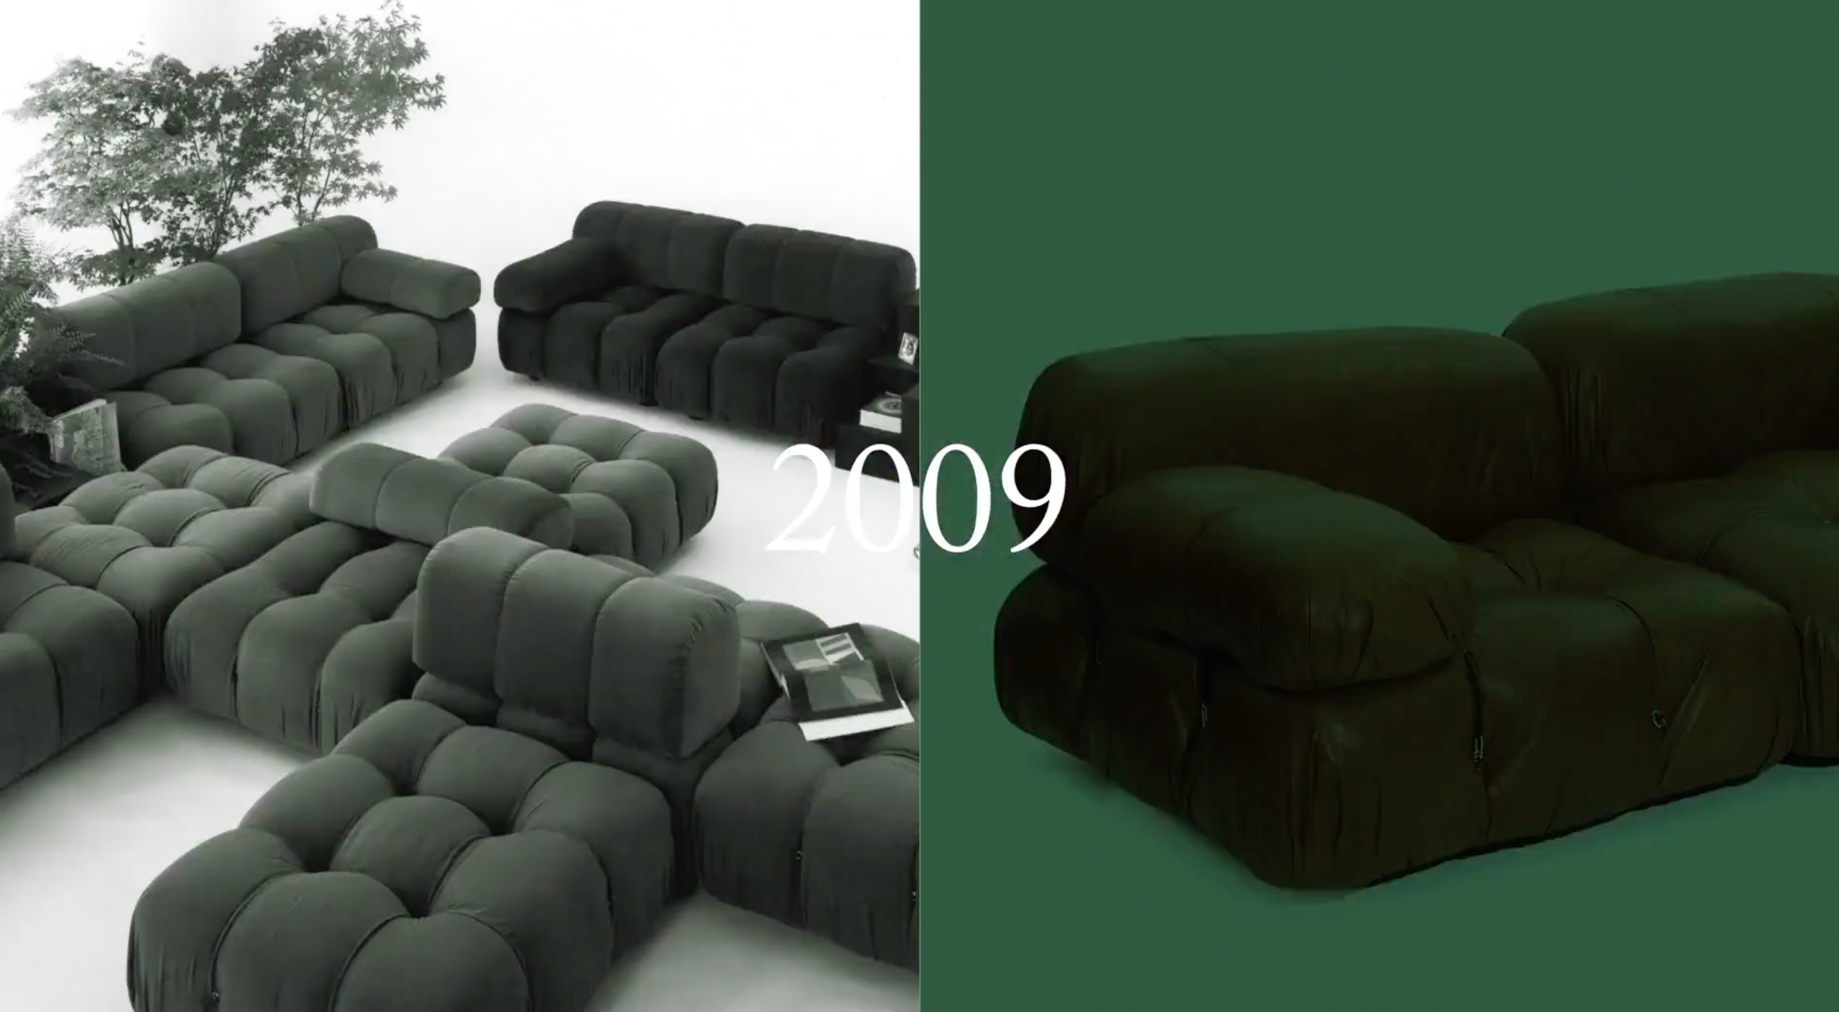 Camaleonda Classic Sofa Collection B&B Italia - Mario Bellini - 2009